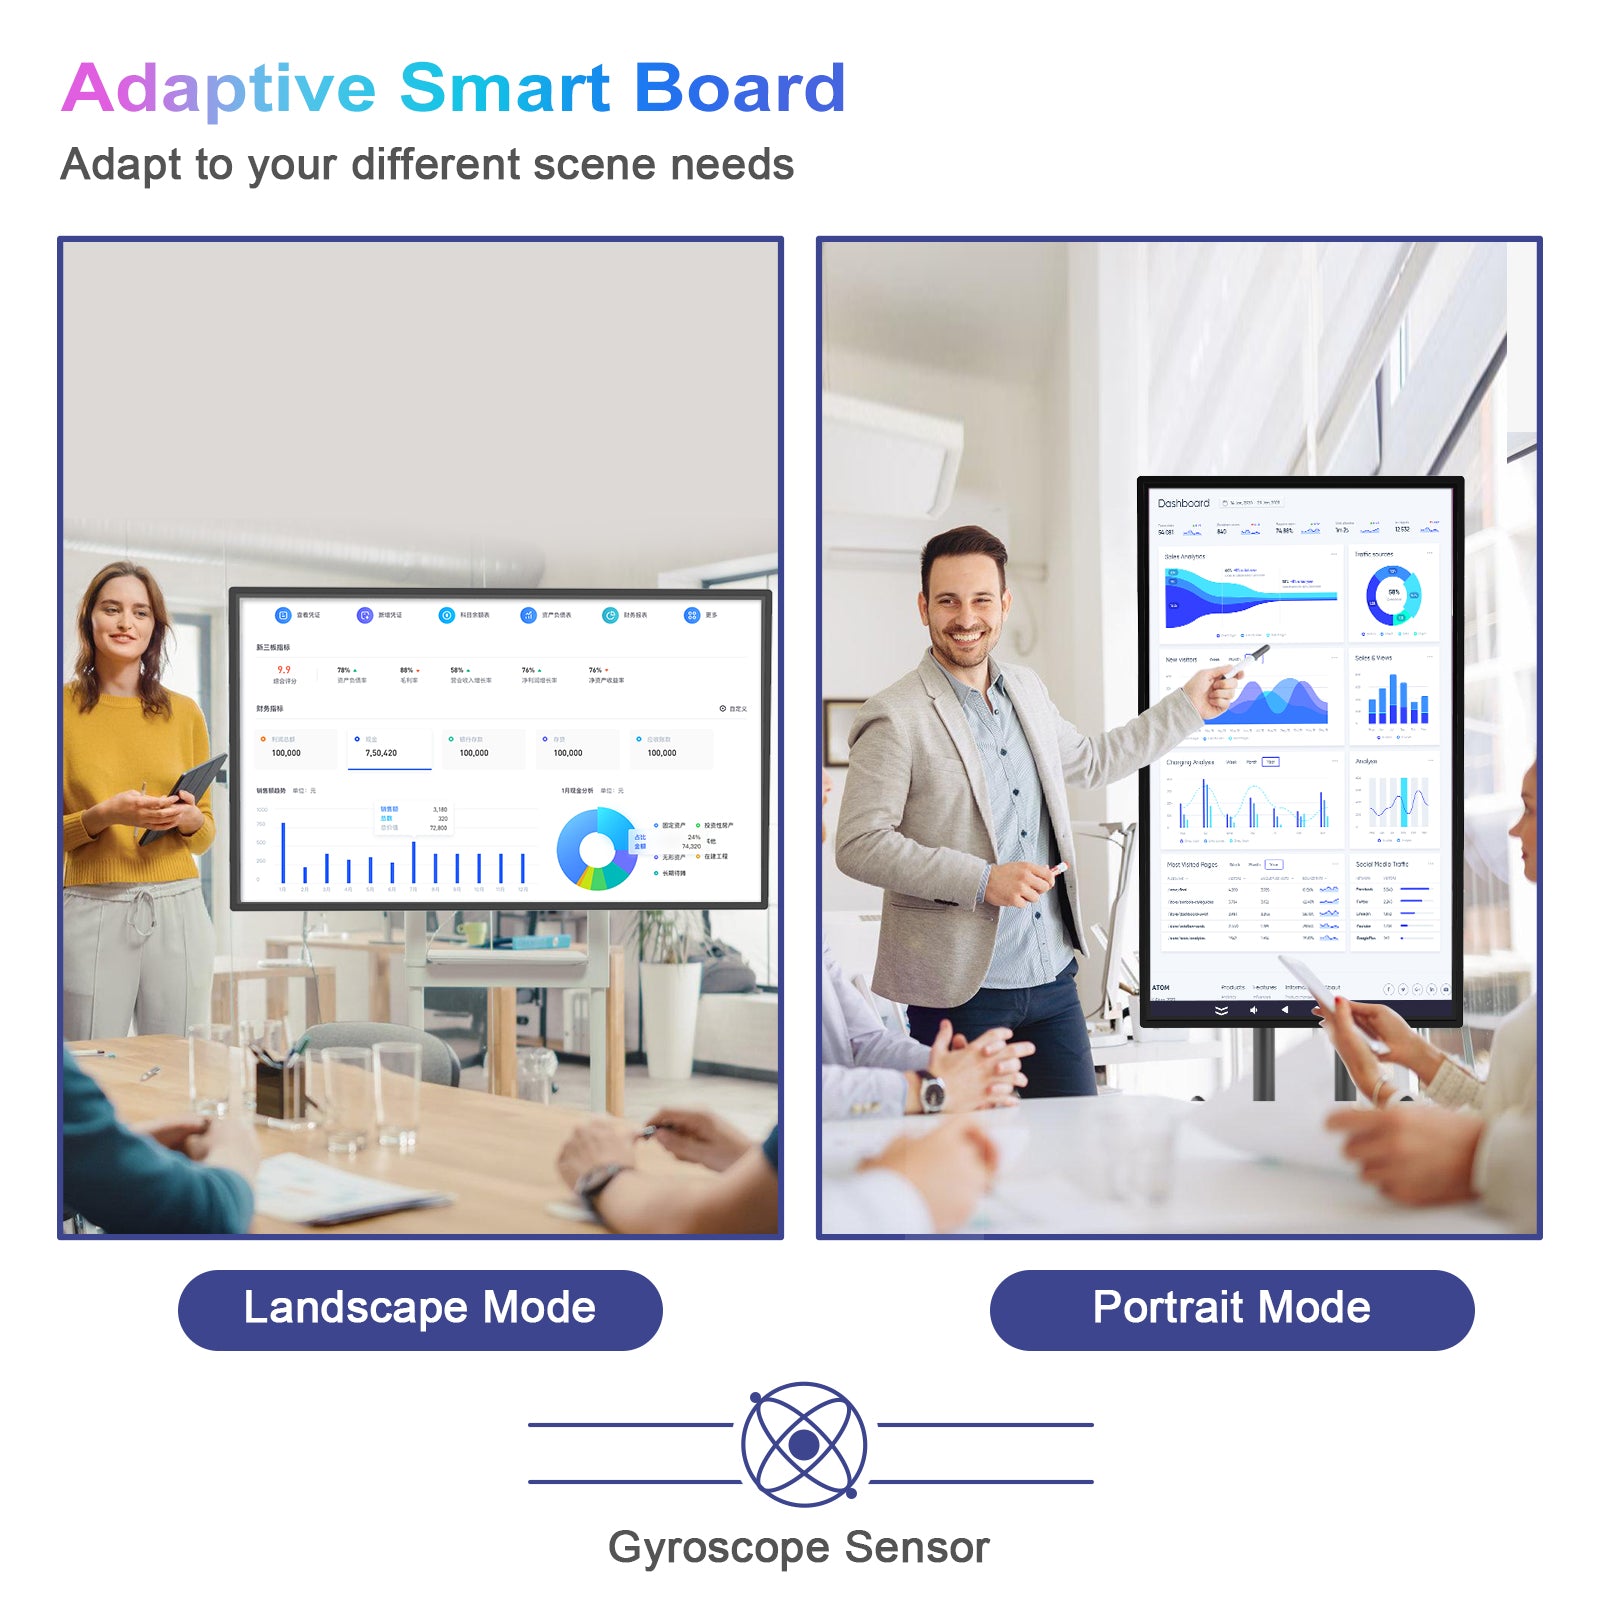 Armerboard Digital Stream Live Smart Board E1 43”